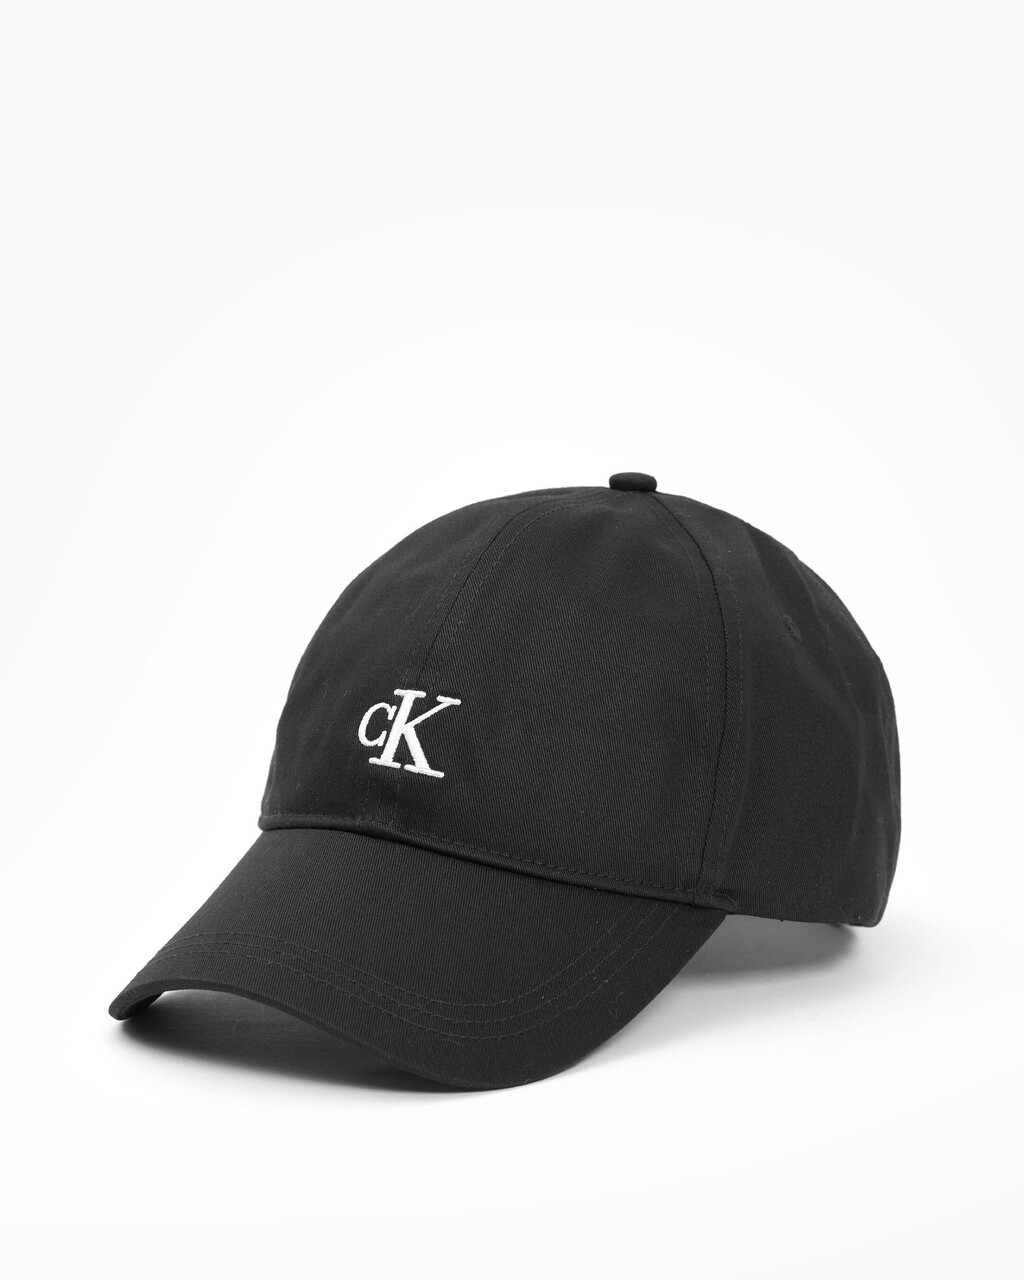 EMBROIDERED LOGO 棒球帽, BLACK, hi-res